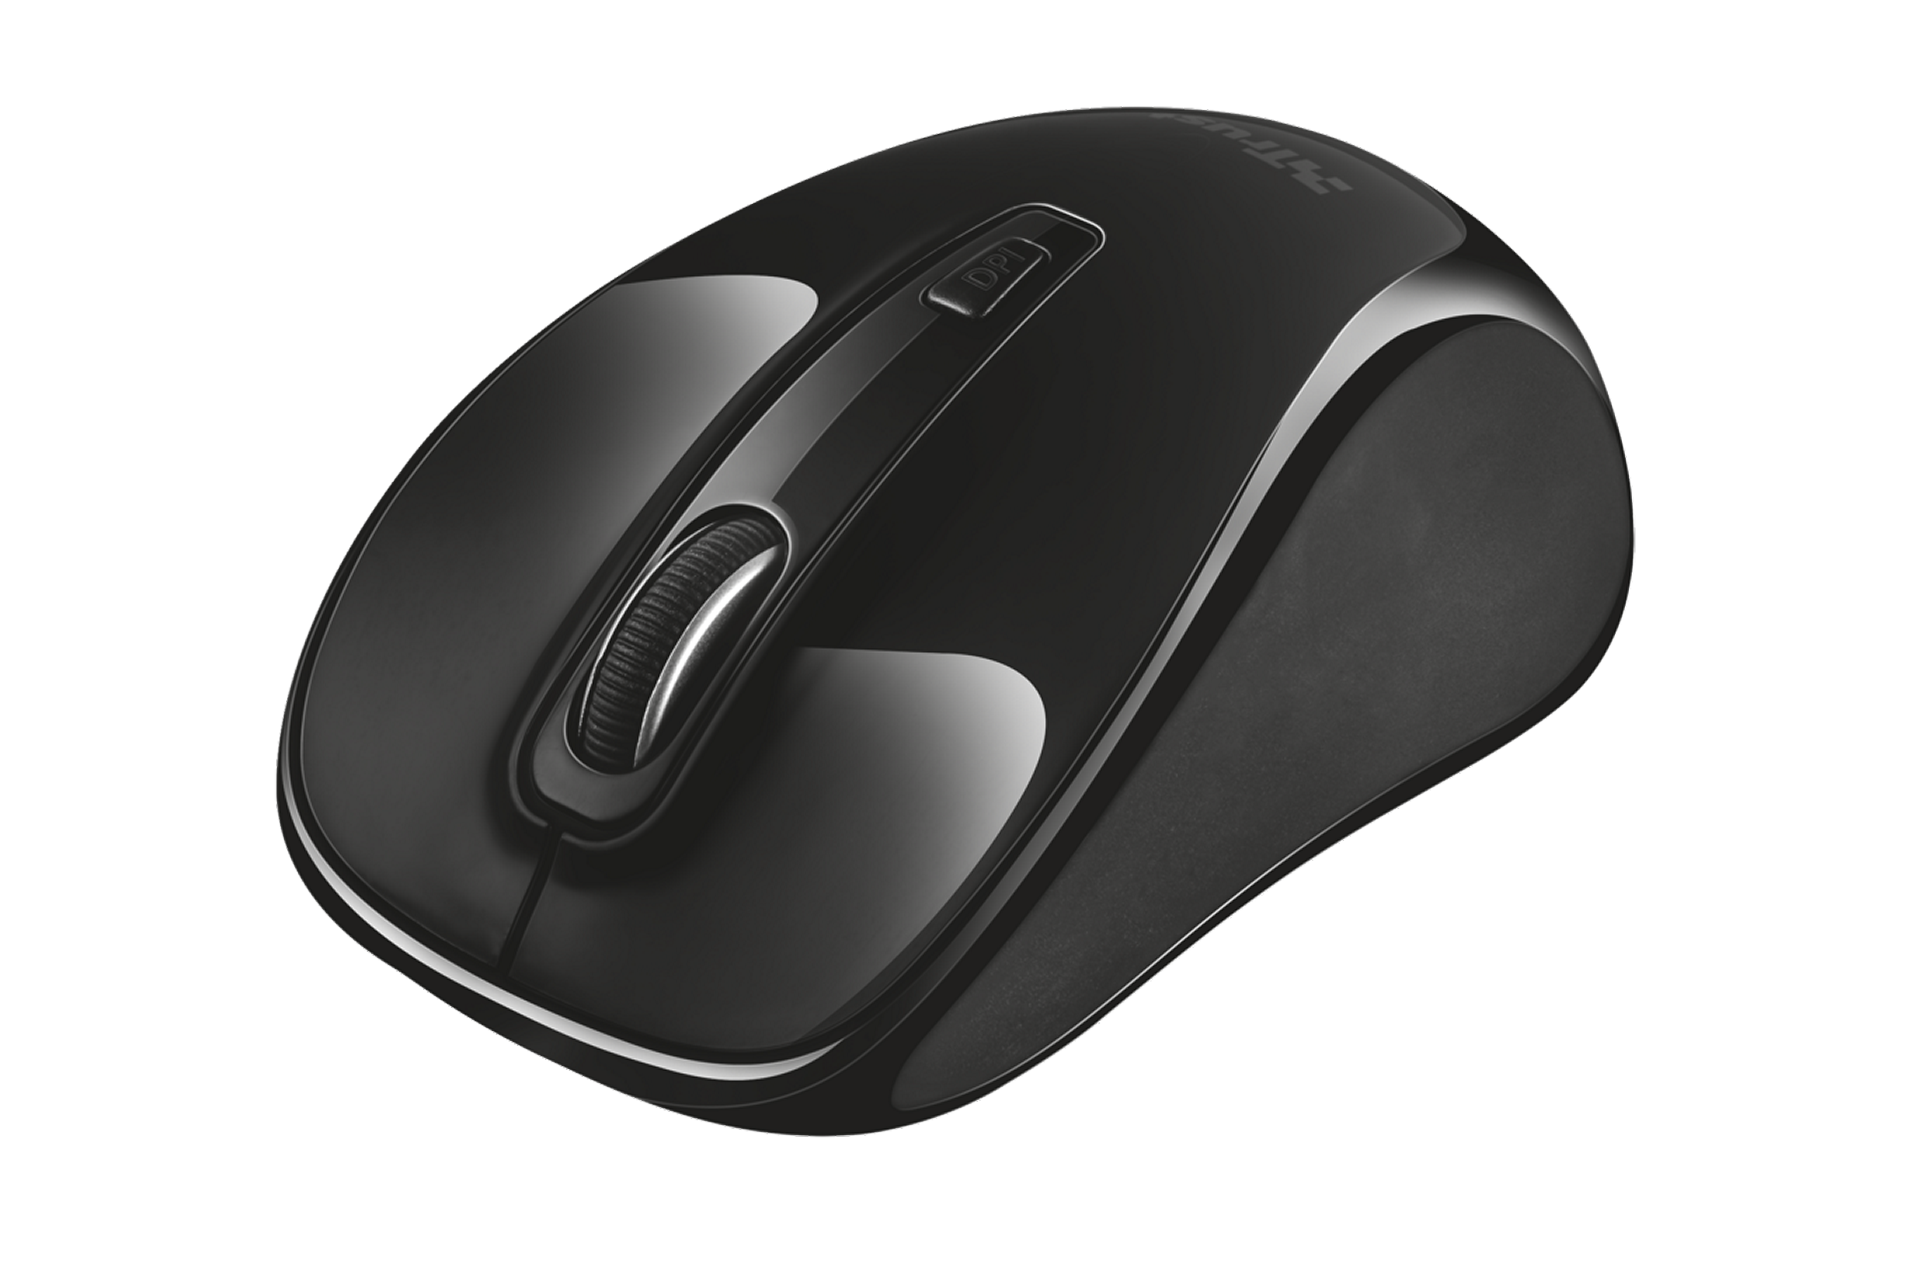 myš TRUST Xani Optical Bluetooth Mouse - Black